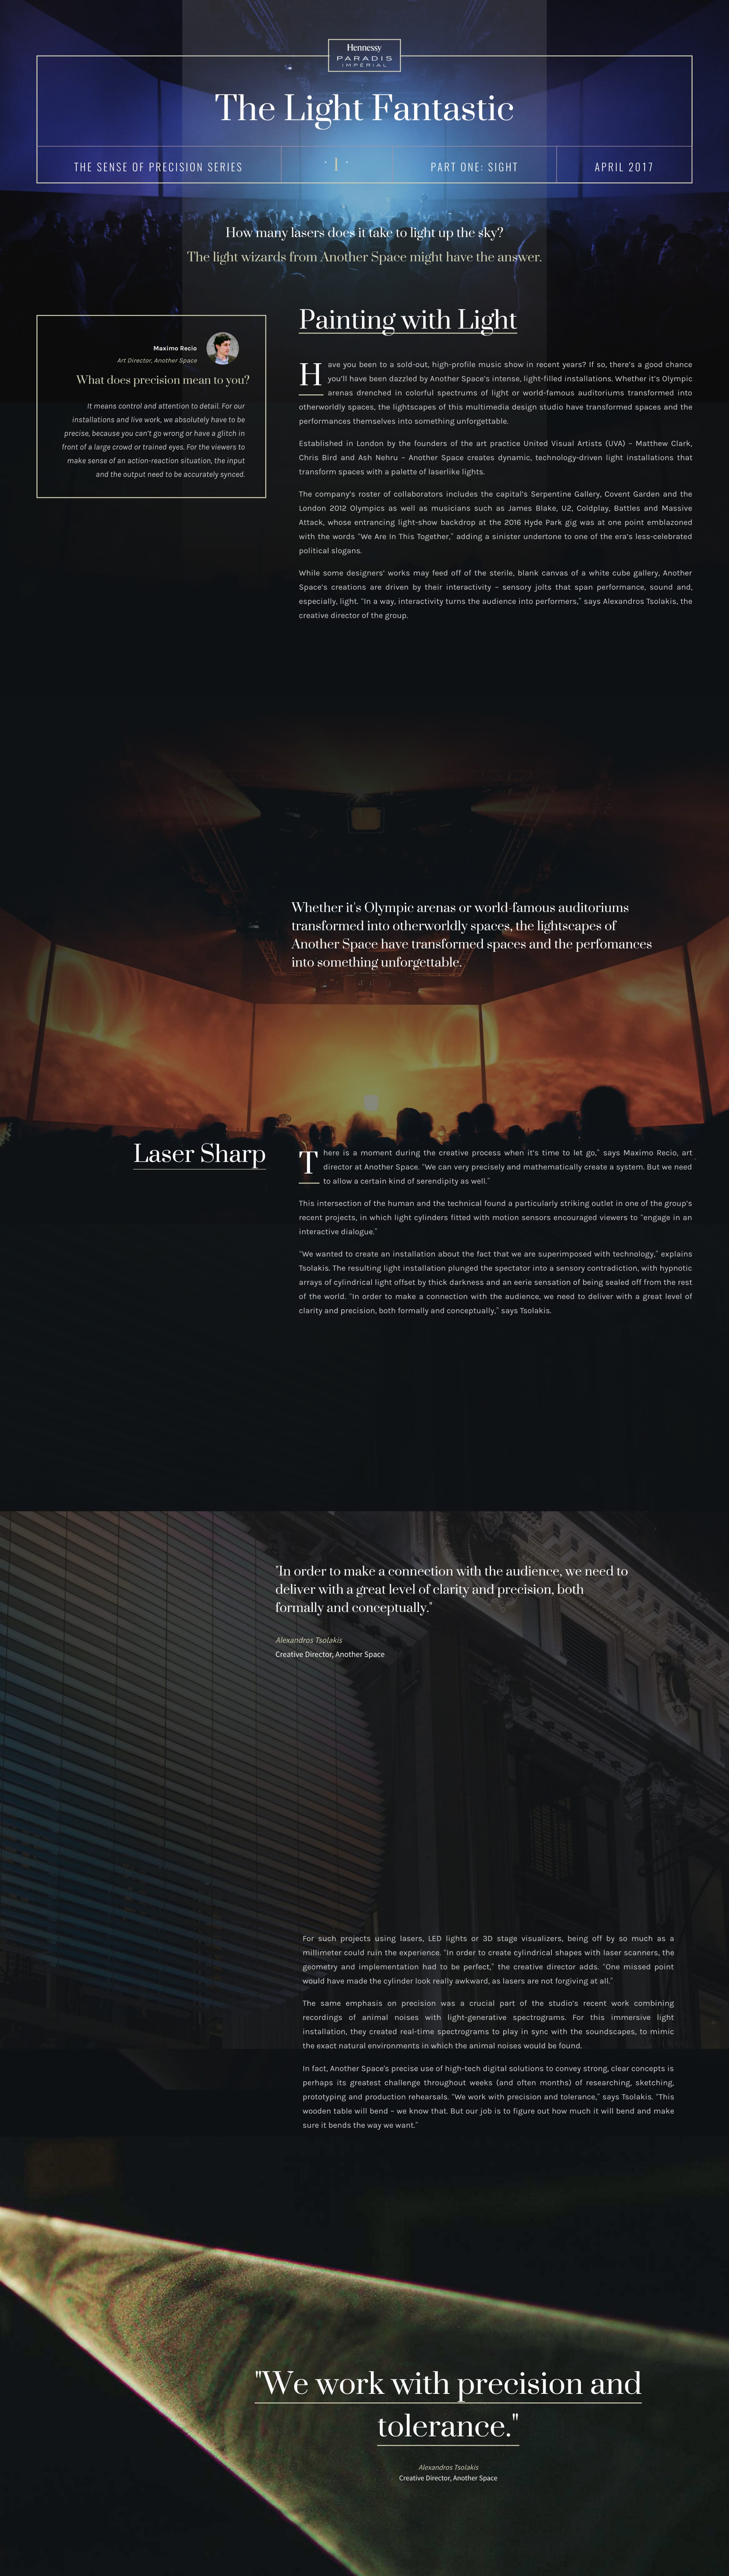 The Light Fantastic Website Screenshot